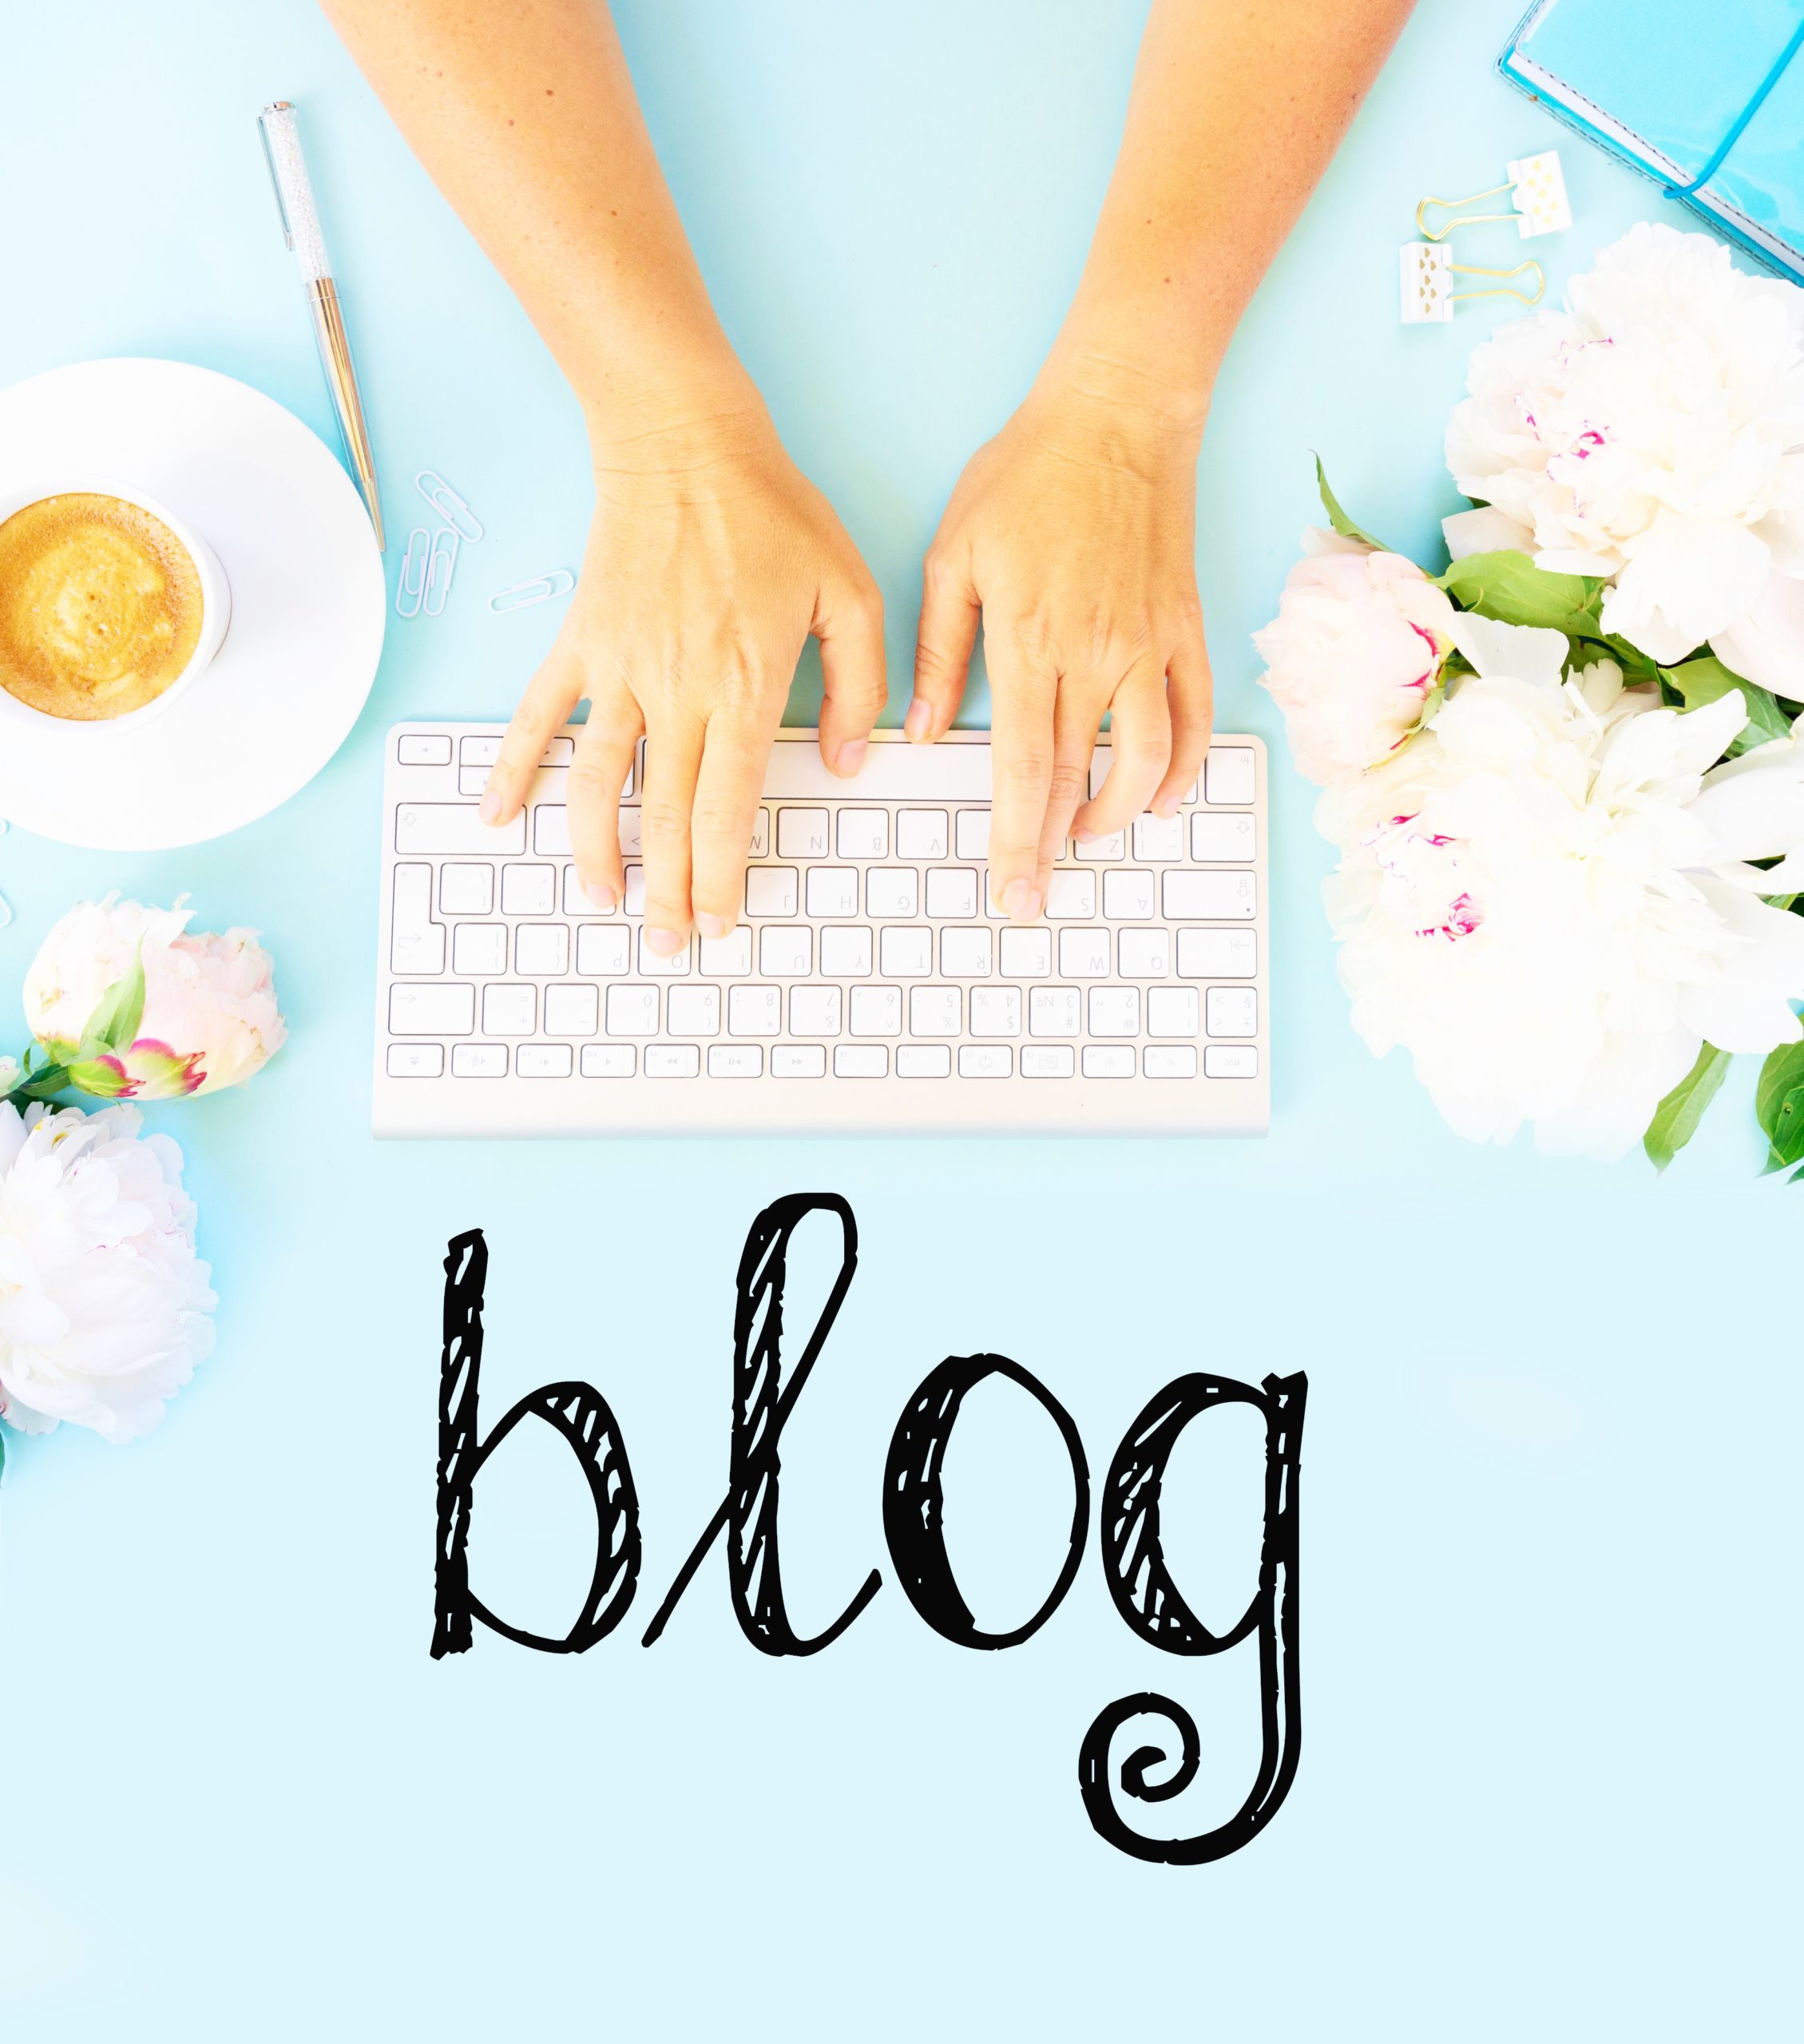 <img src="blue.jpg" alt="blog graphic online blogging courses for bloggers"/> 